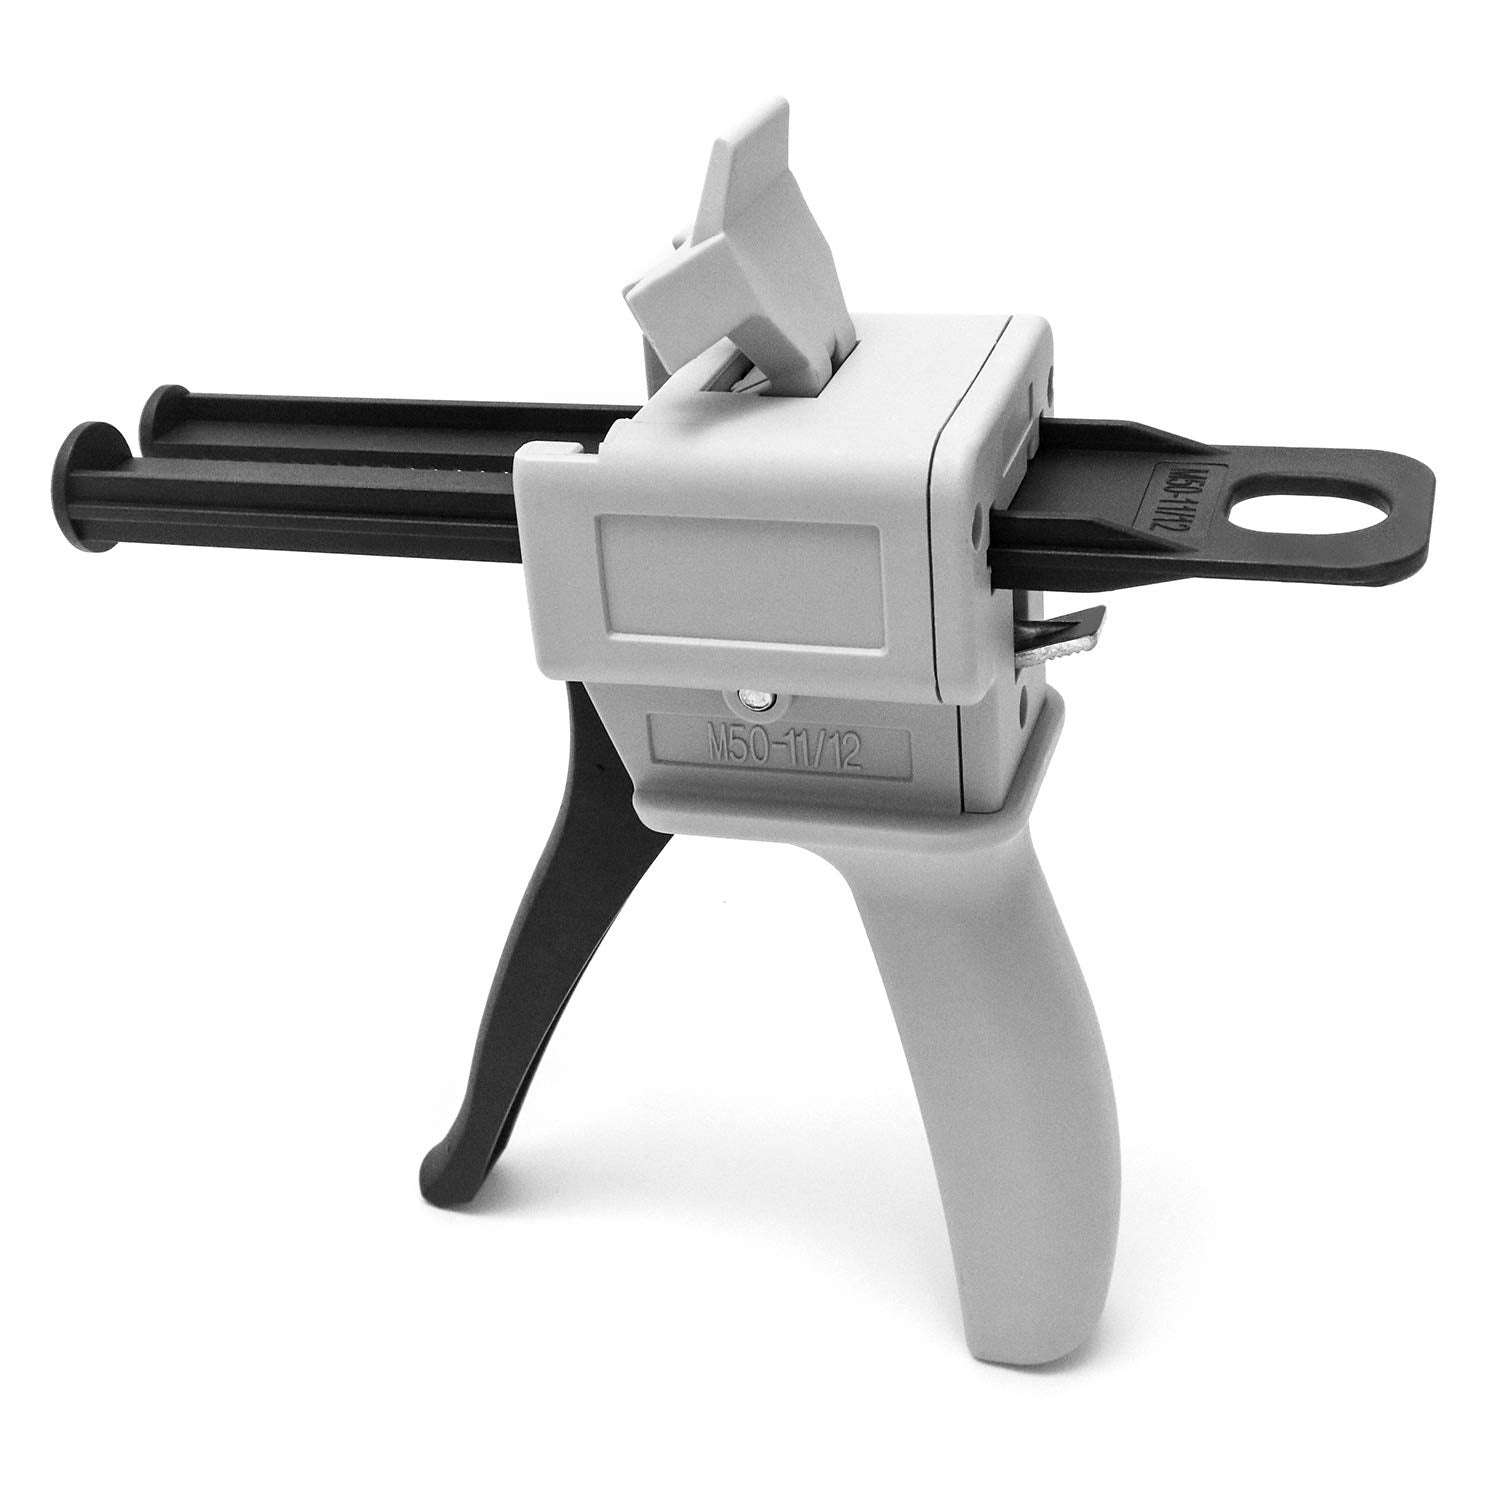 Budget Cartridge Gun for Methacrylate 50ml 1:1 Mix (Rectangular Flange)